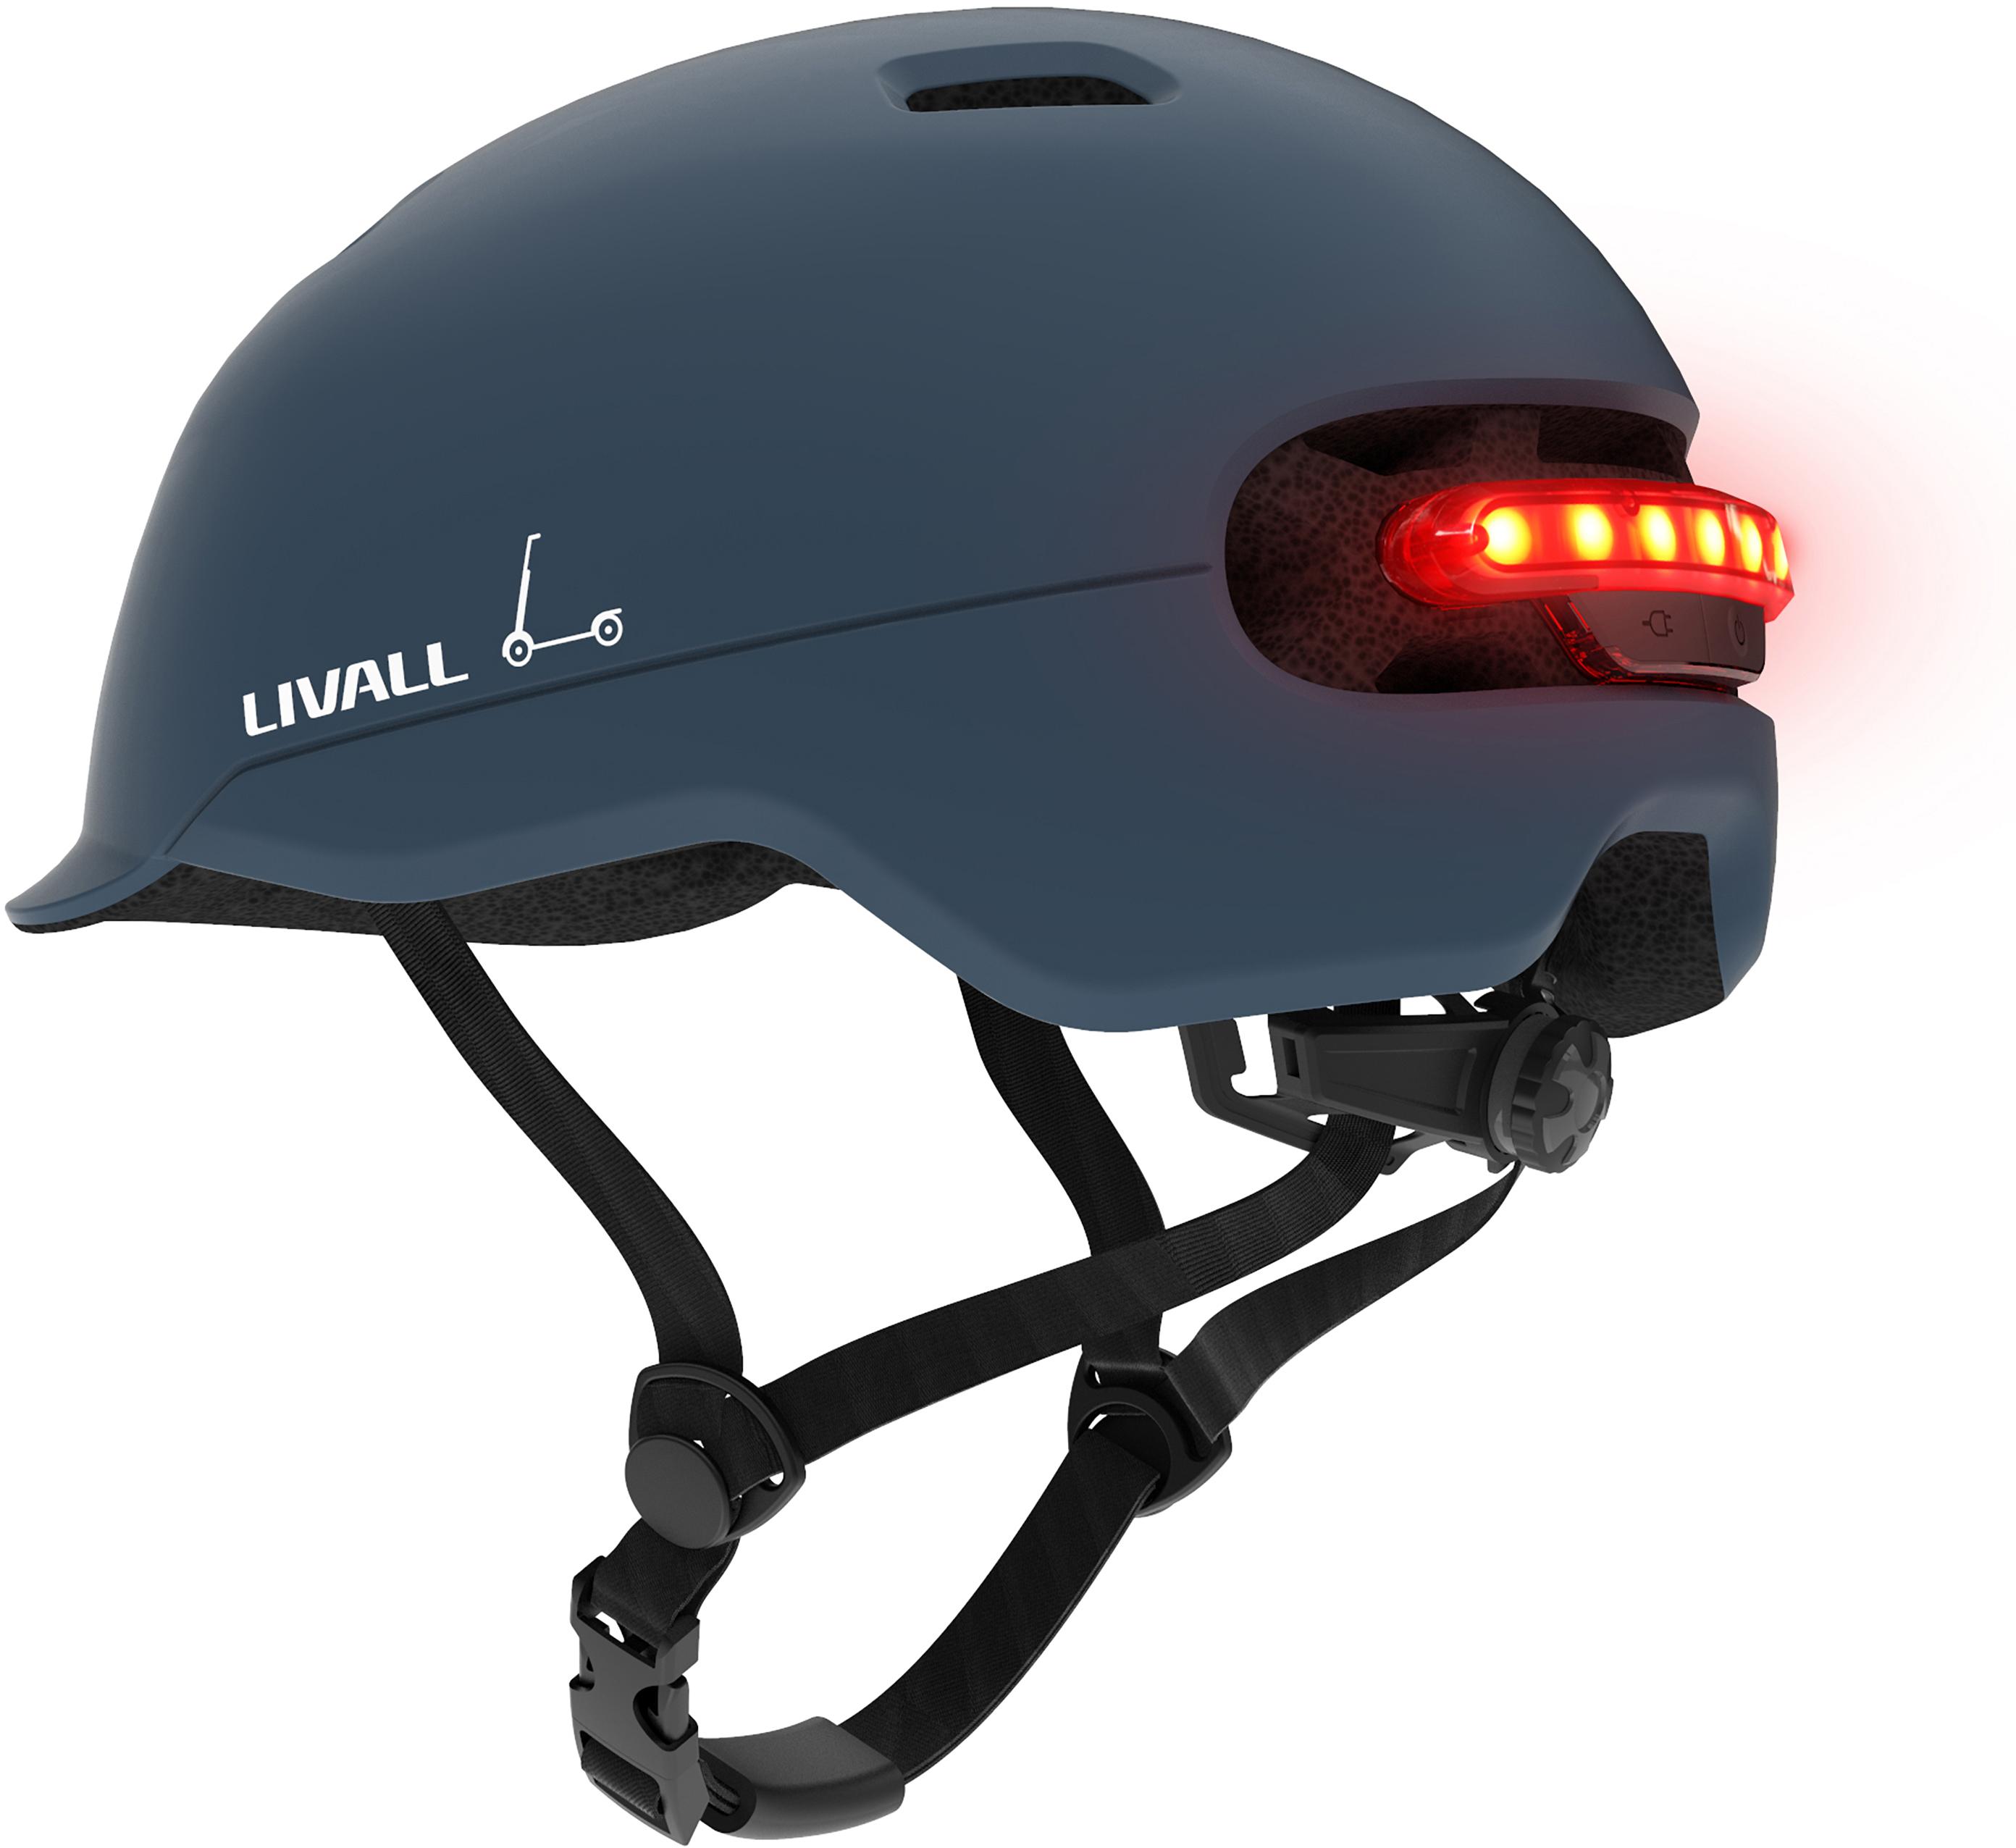 Livall C20 Smart Leisure Helmet Ocean Blue Medium 54-58Cm